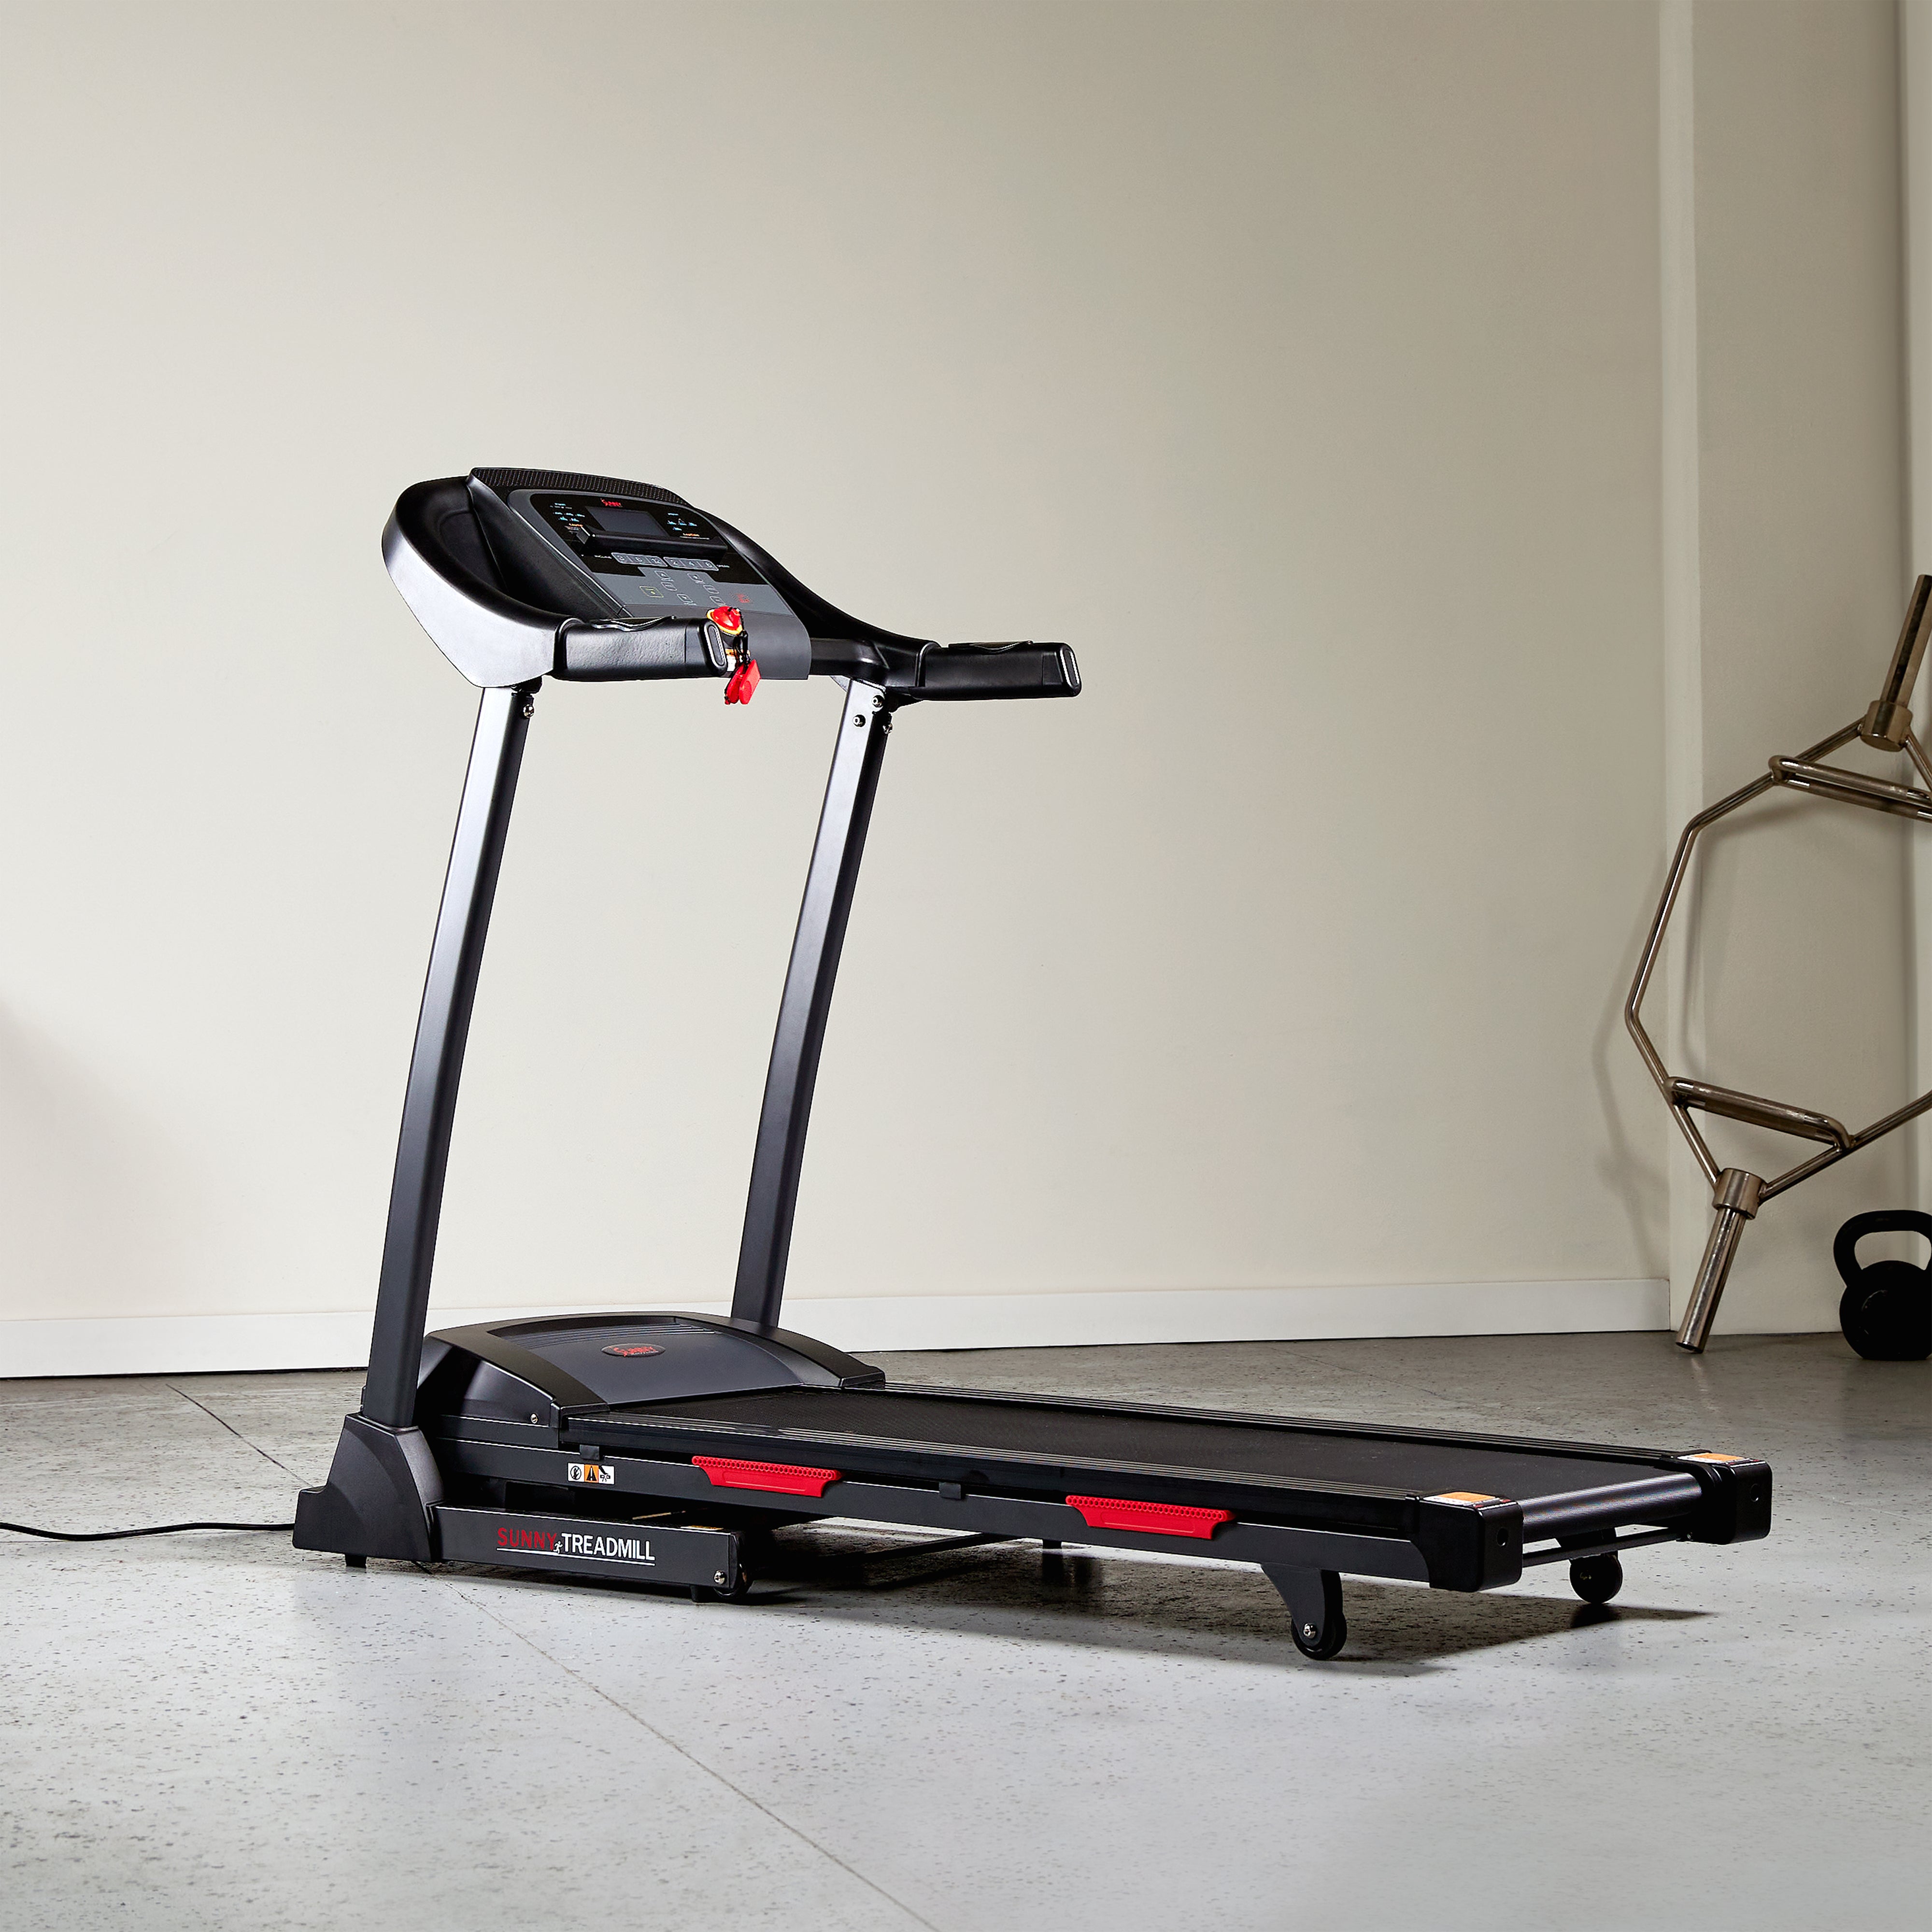 Premium Folding Auto-Incline Smart Treadmill with Exclusive SunnyFit? App Enhanced Bluetooth Connectivity